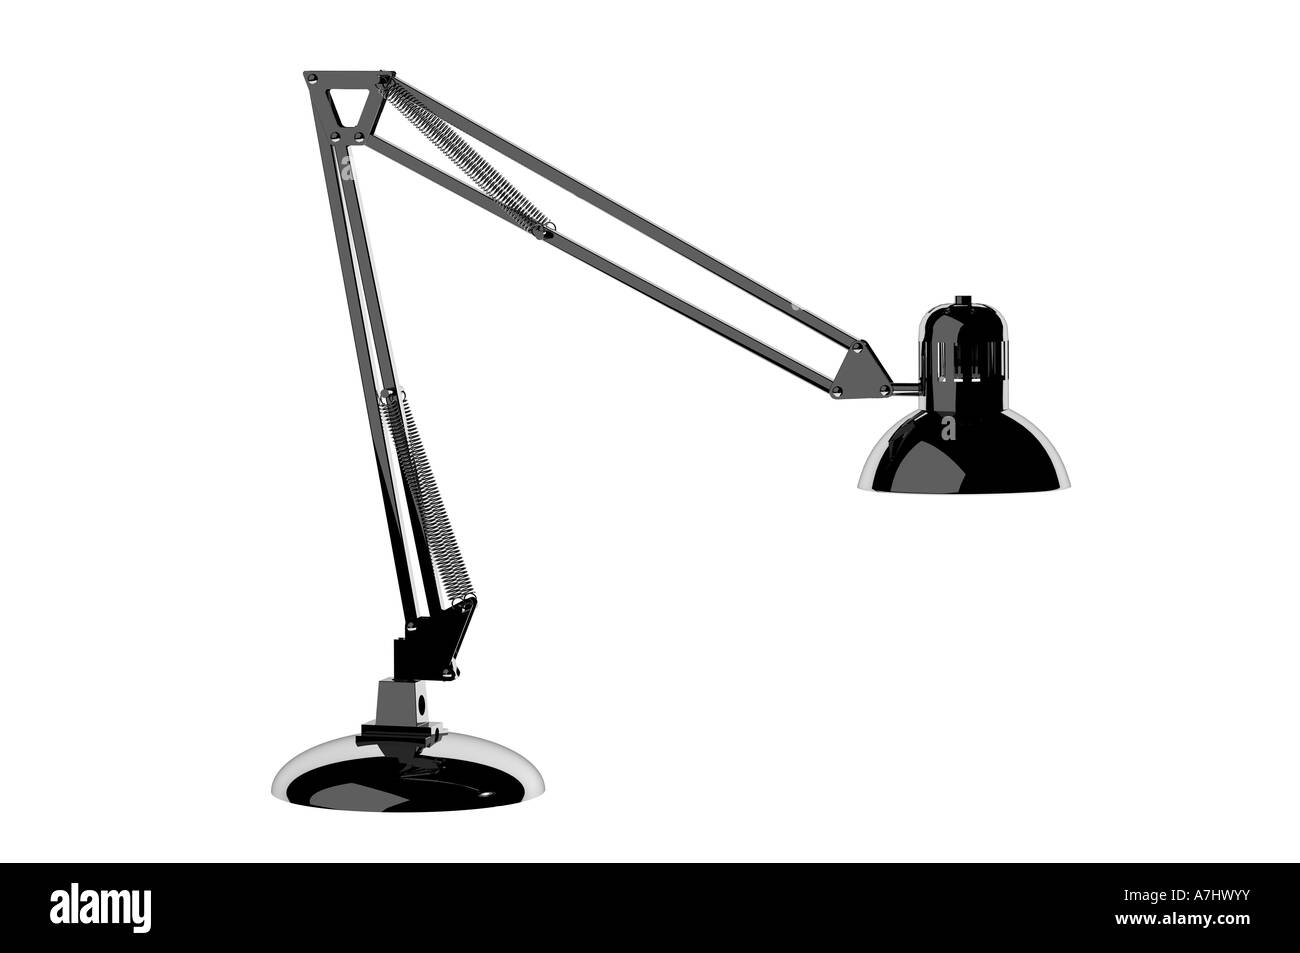 Anglepoise lamp Stock Photo